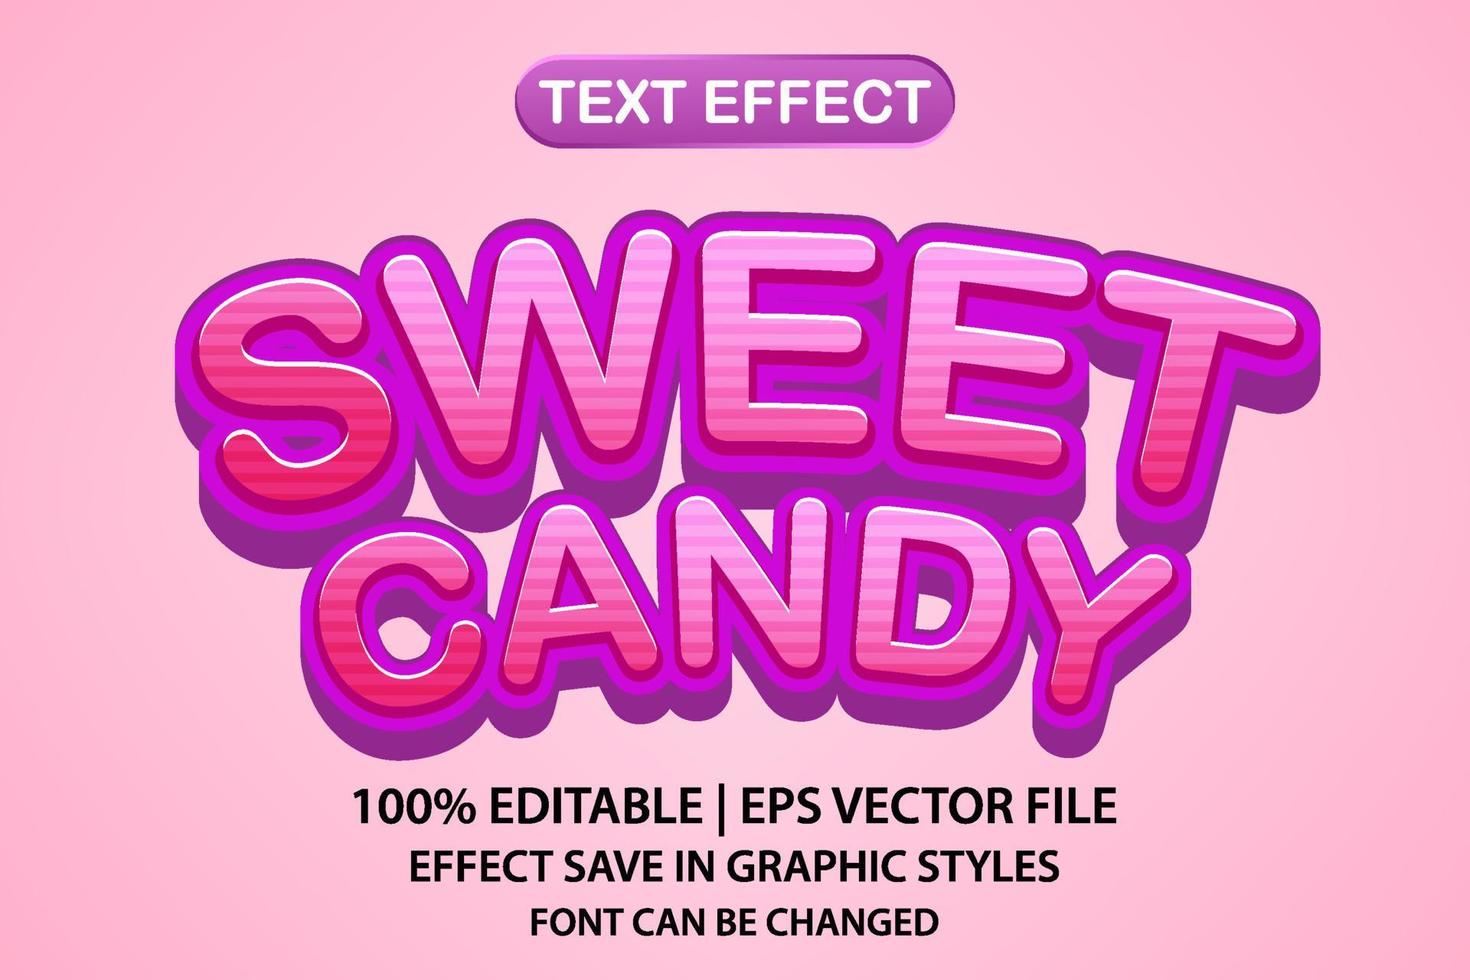 efeito de texto editável 3d sweet candy vetor